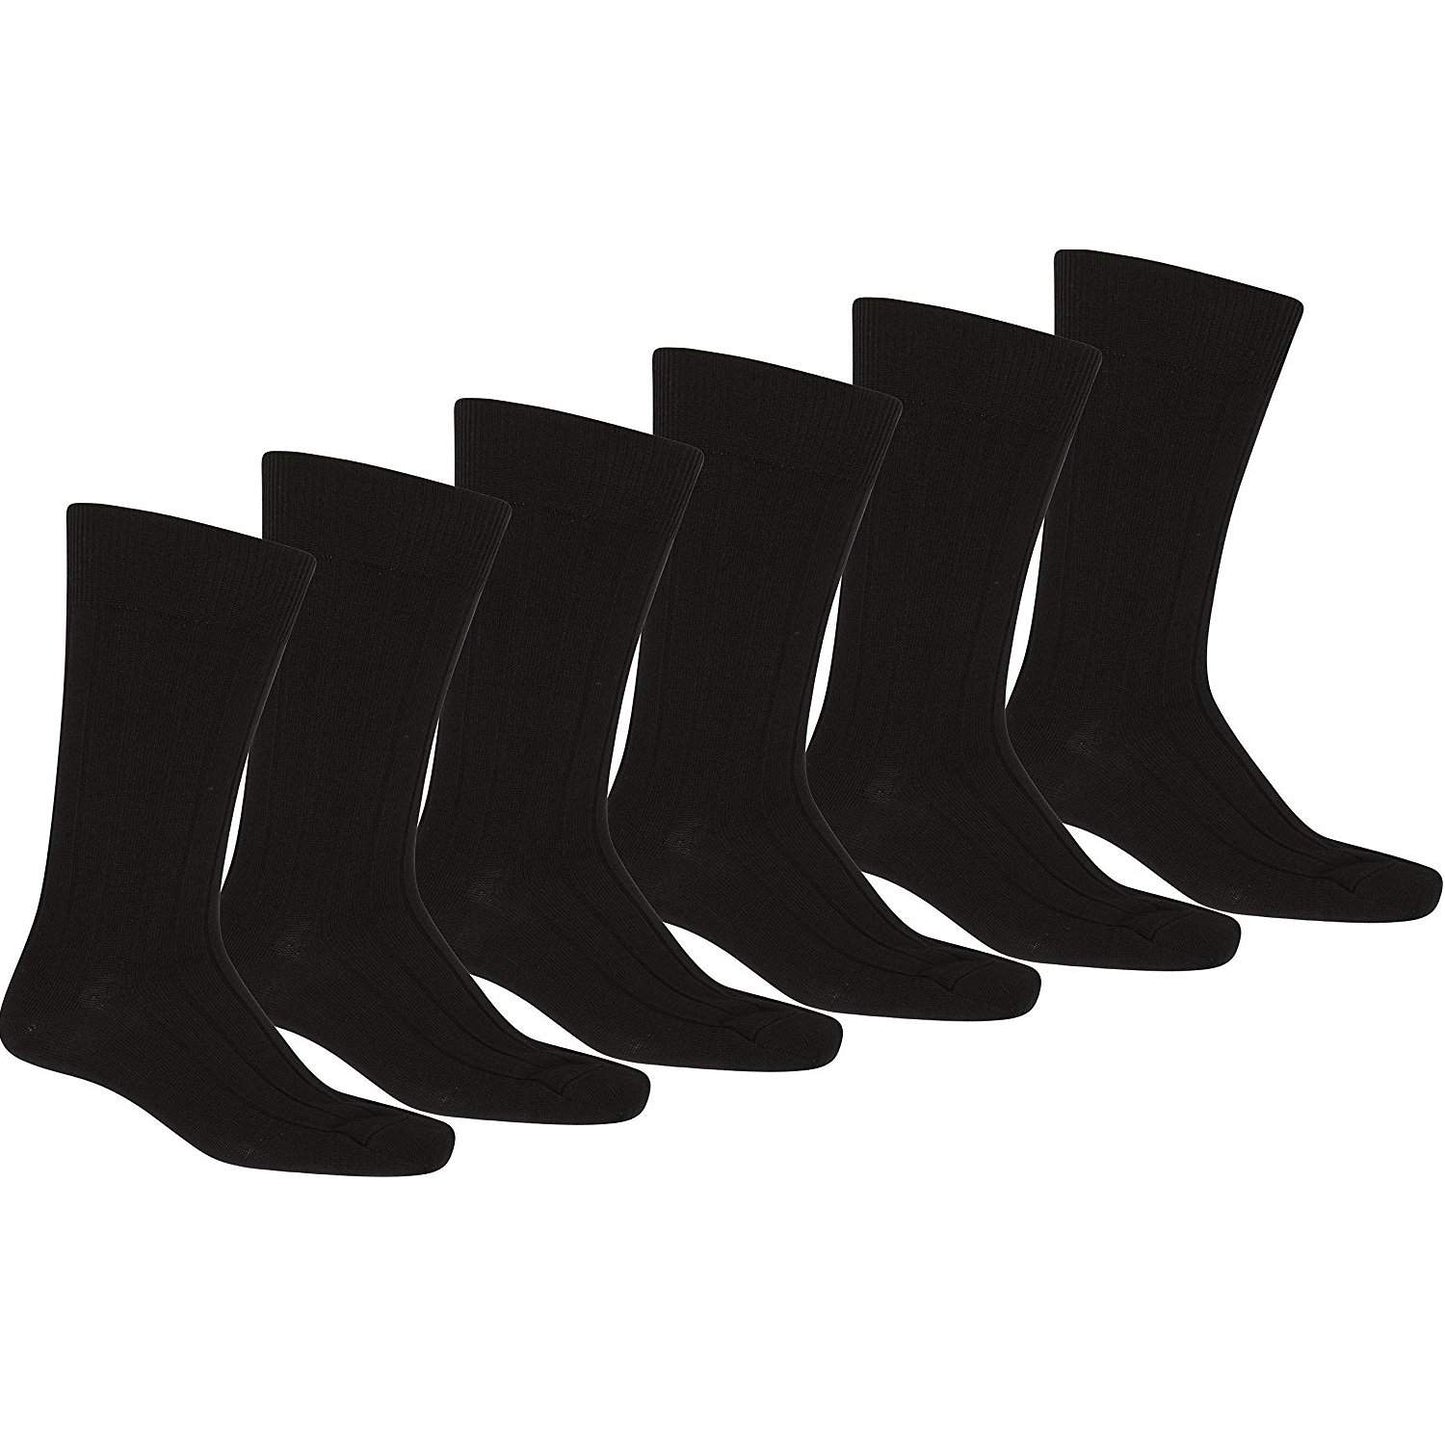 Pack of 72 Unisex Solid Plain Dress Socks - Bulk Wholesale Lot